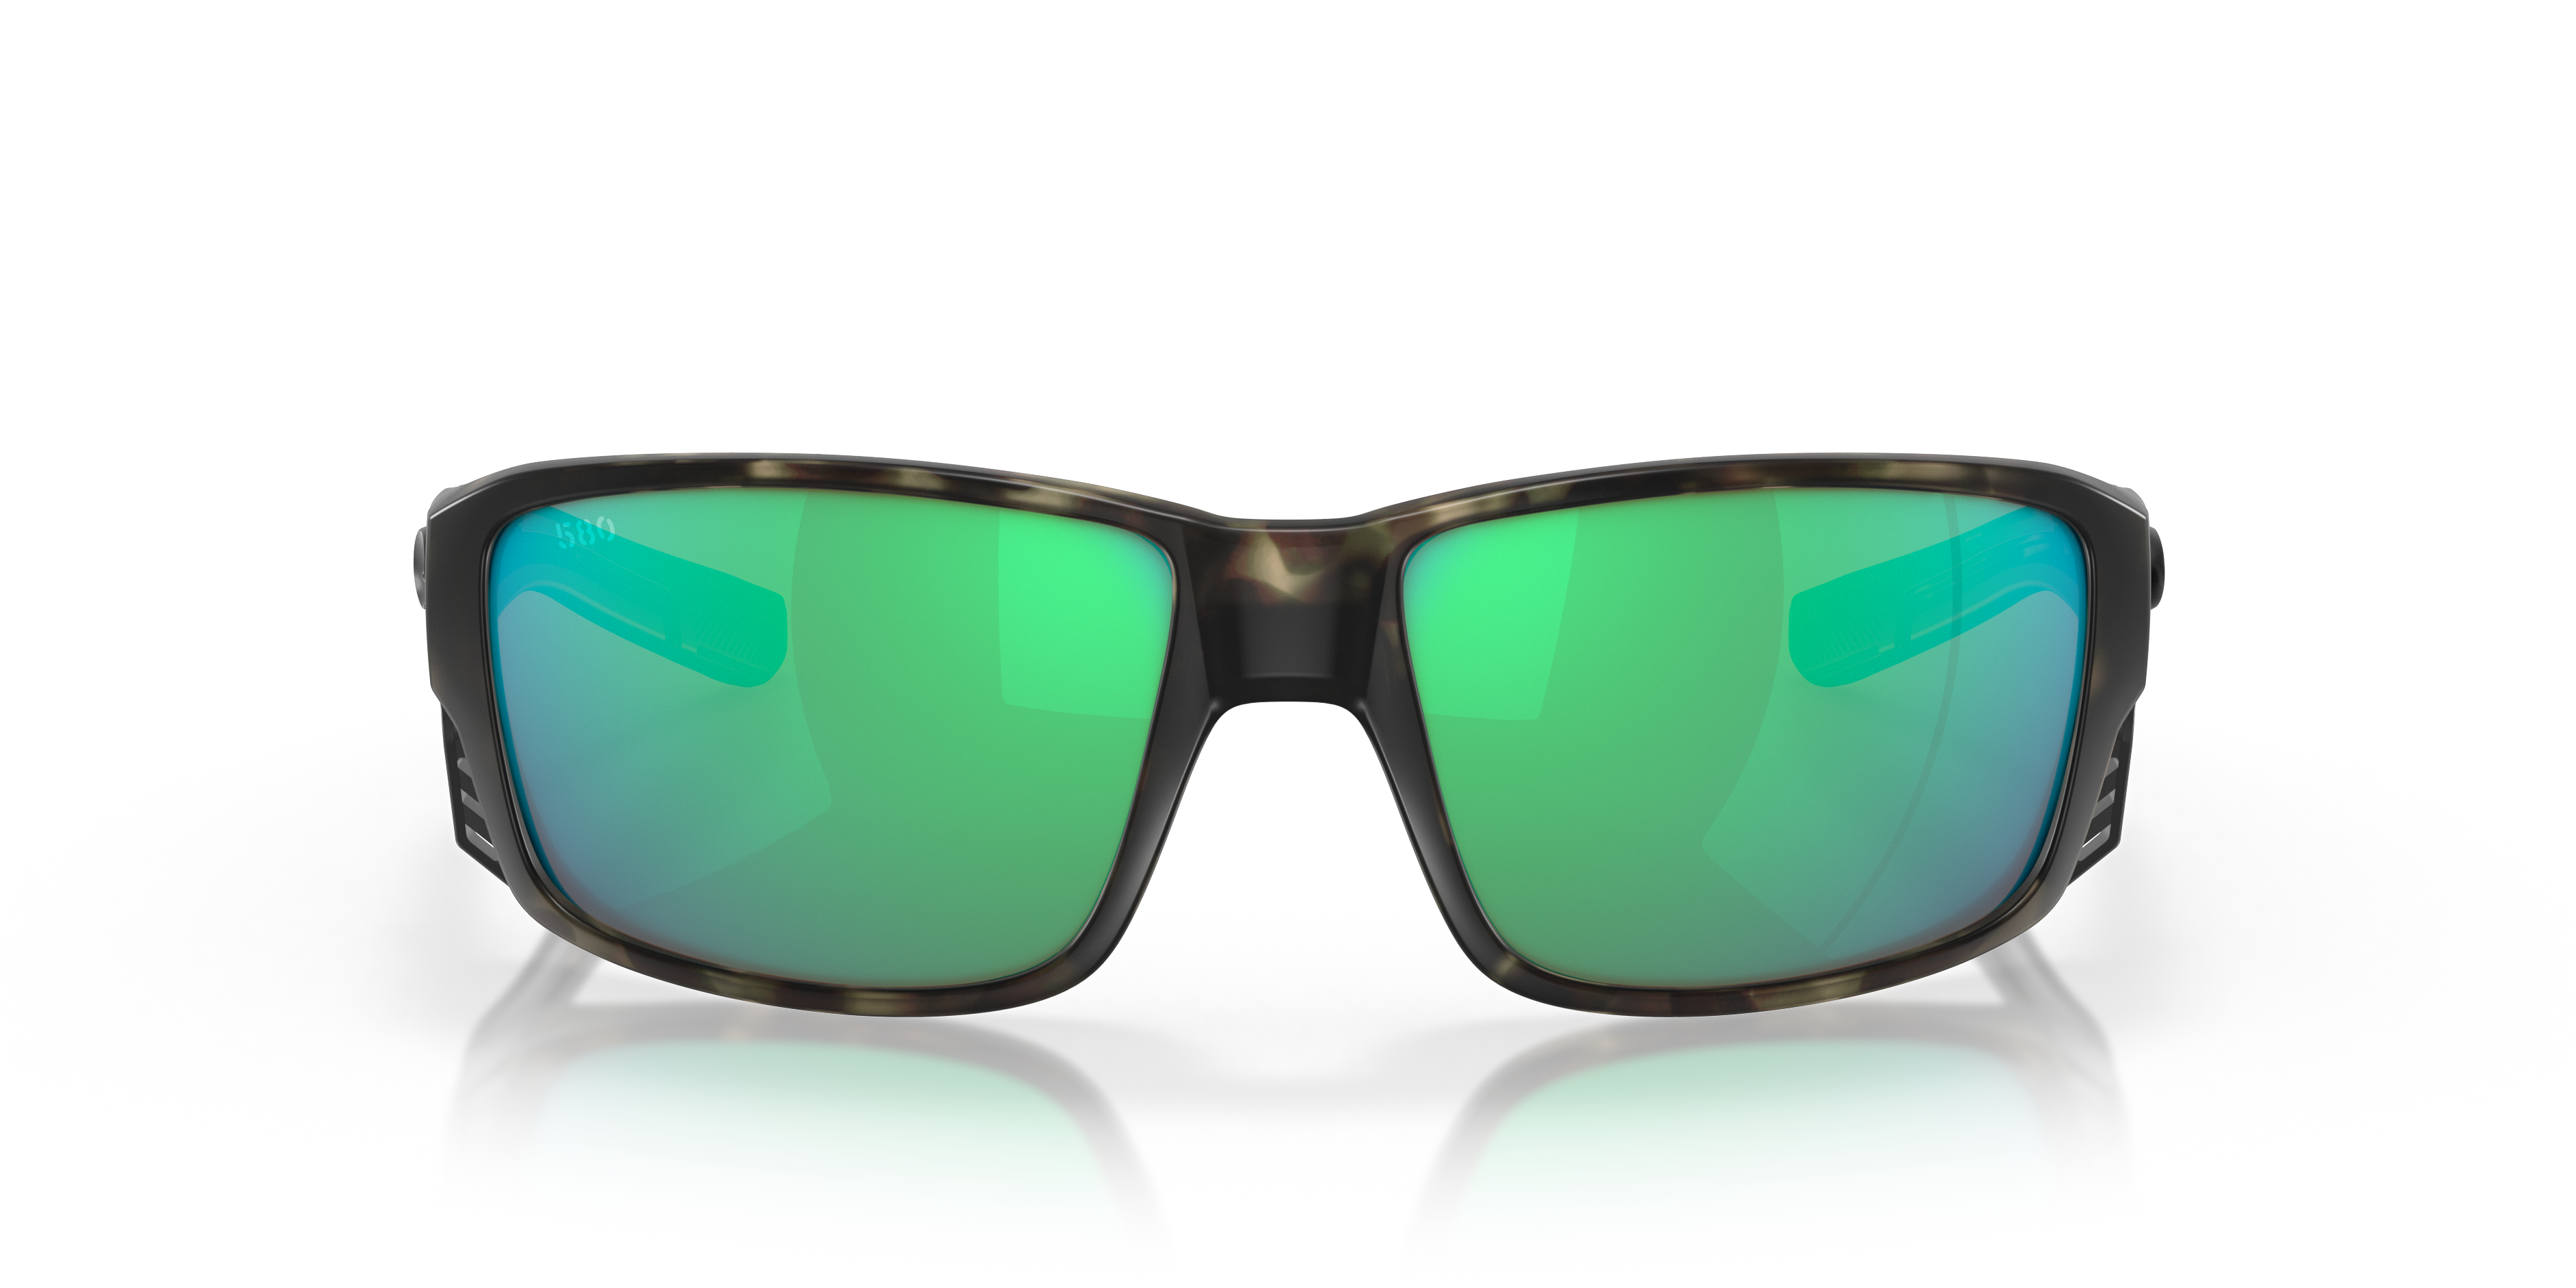 Costa Tuna Alley Omni Fit Sunglasses Tortoise Frame Global Fit Green Mirror Pro-Motion Distributing Direct TA10GFOGMP